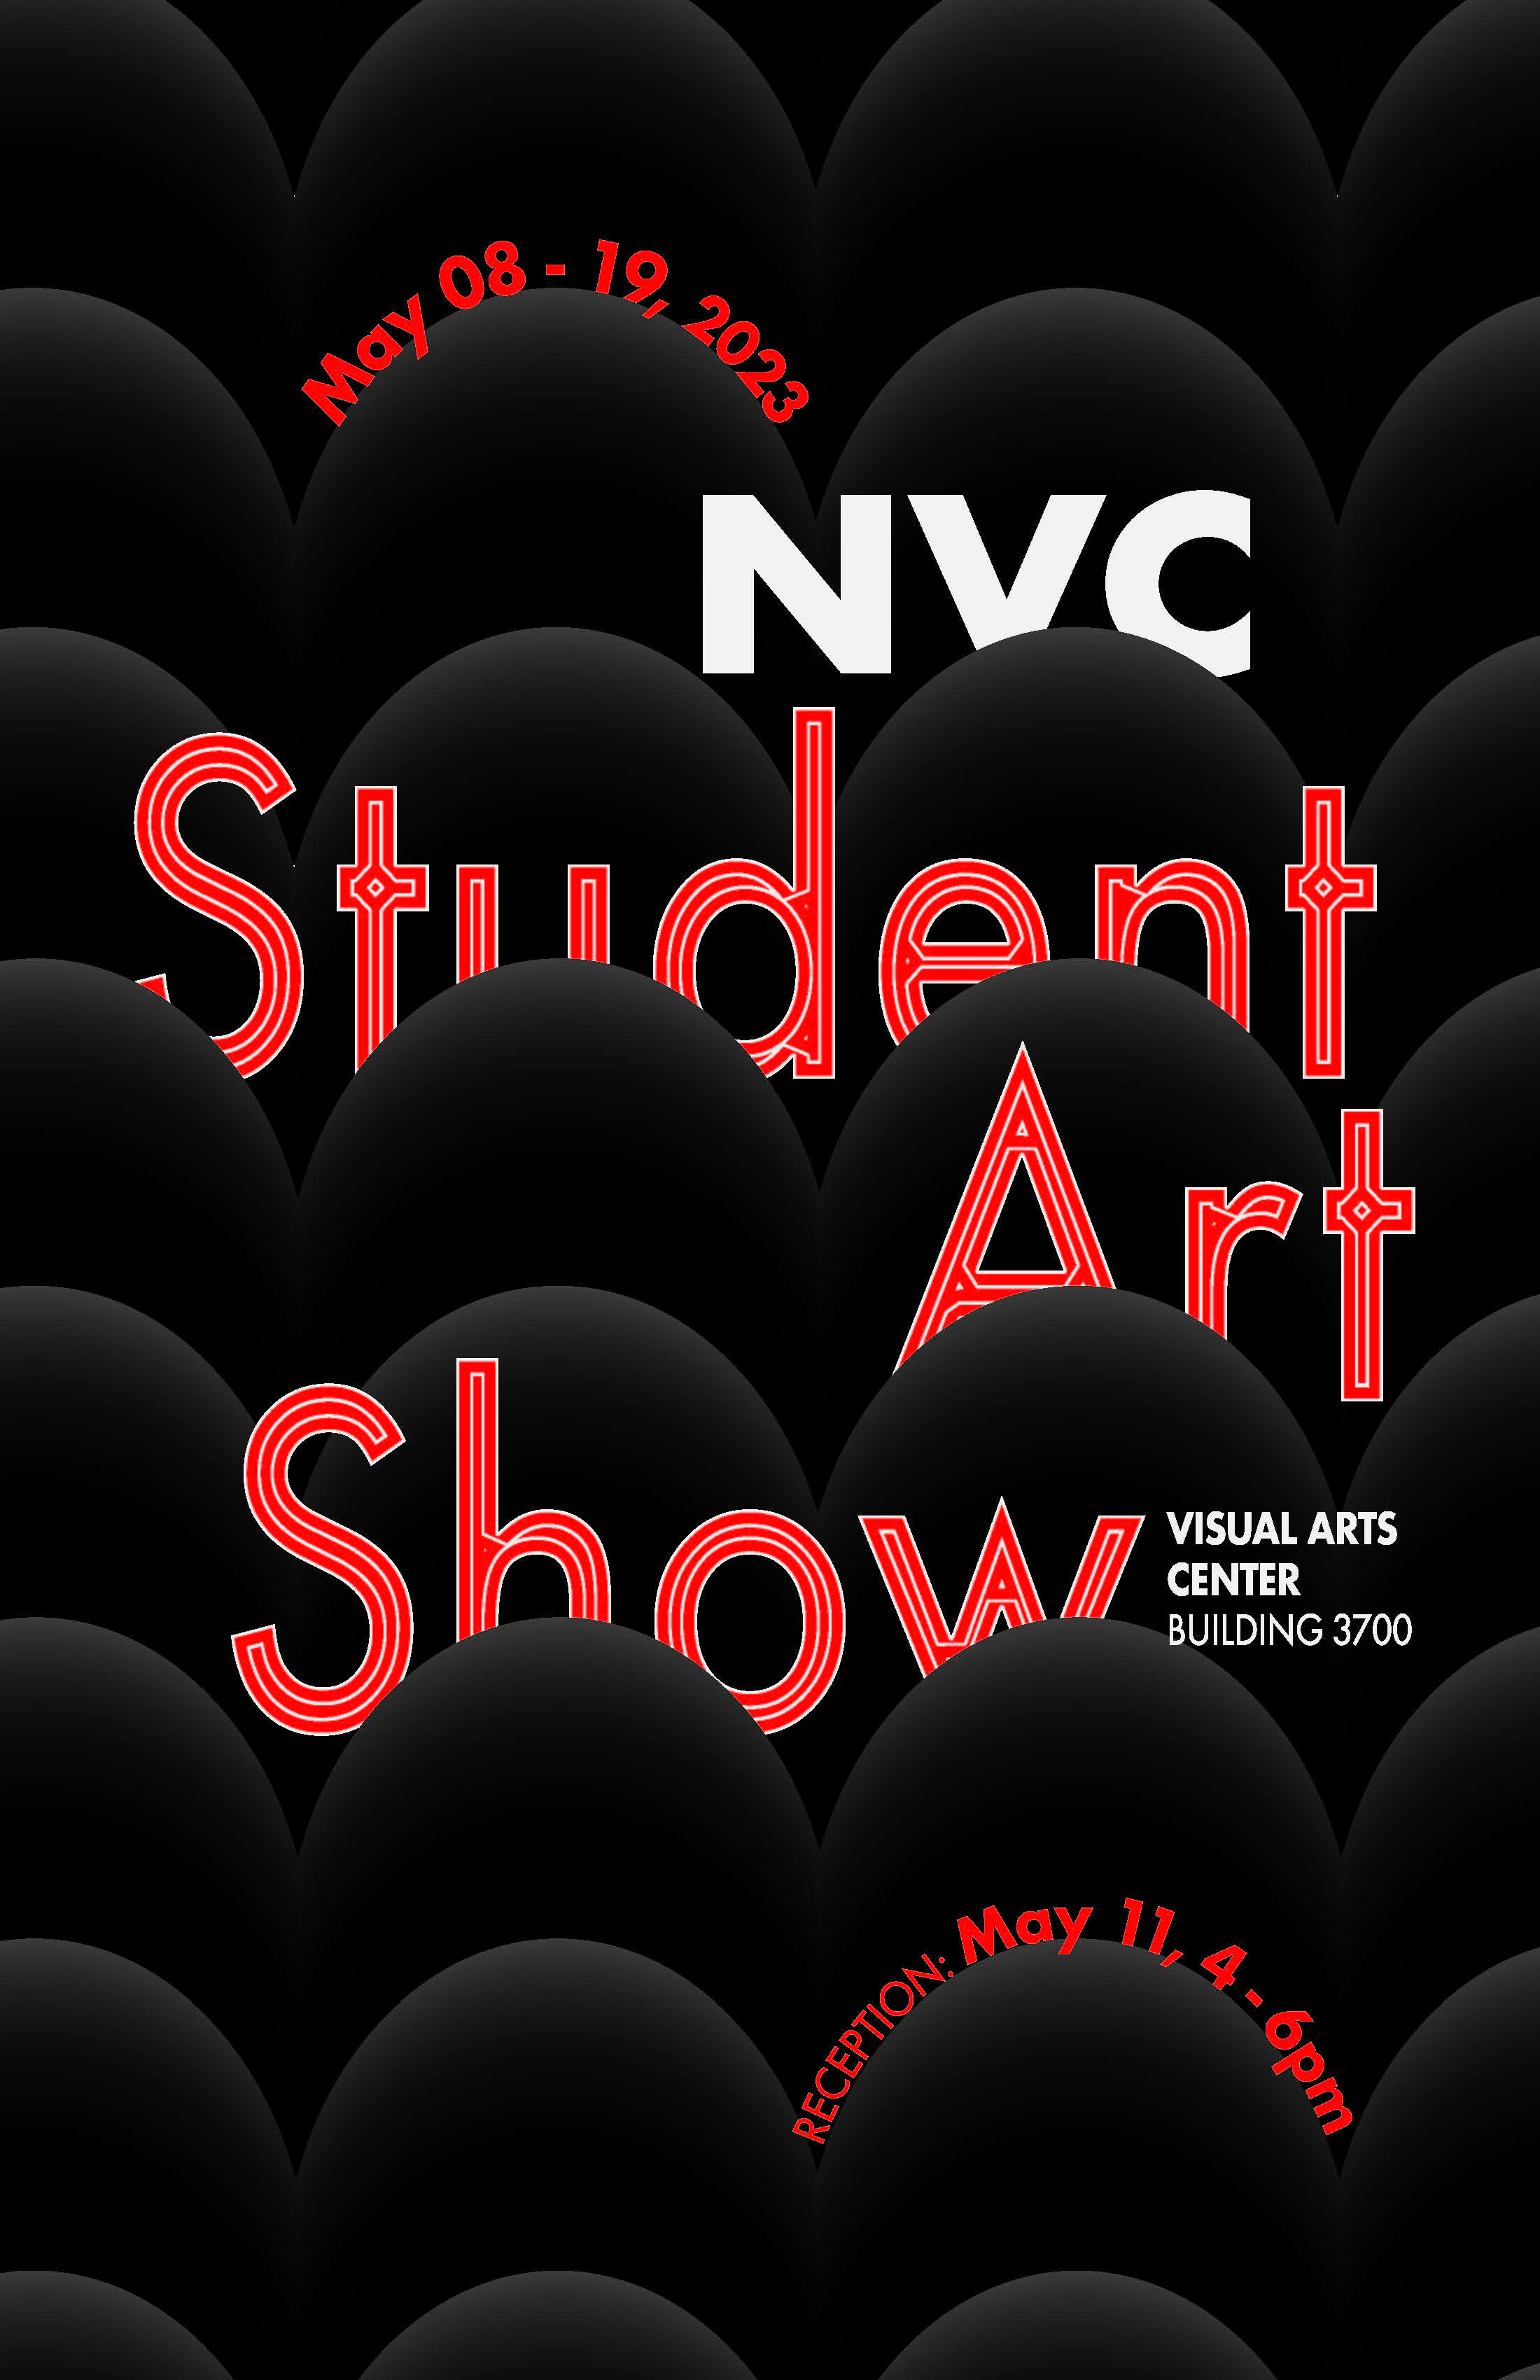 Student Art Show Poster by Tannya Vidales